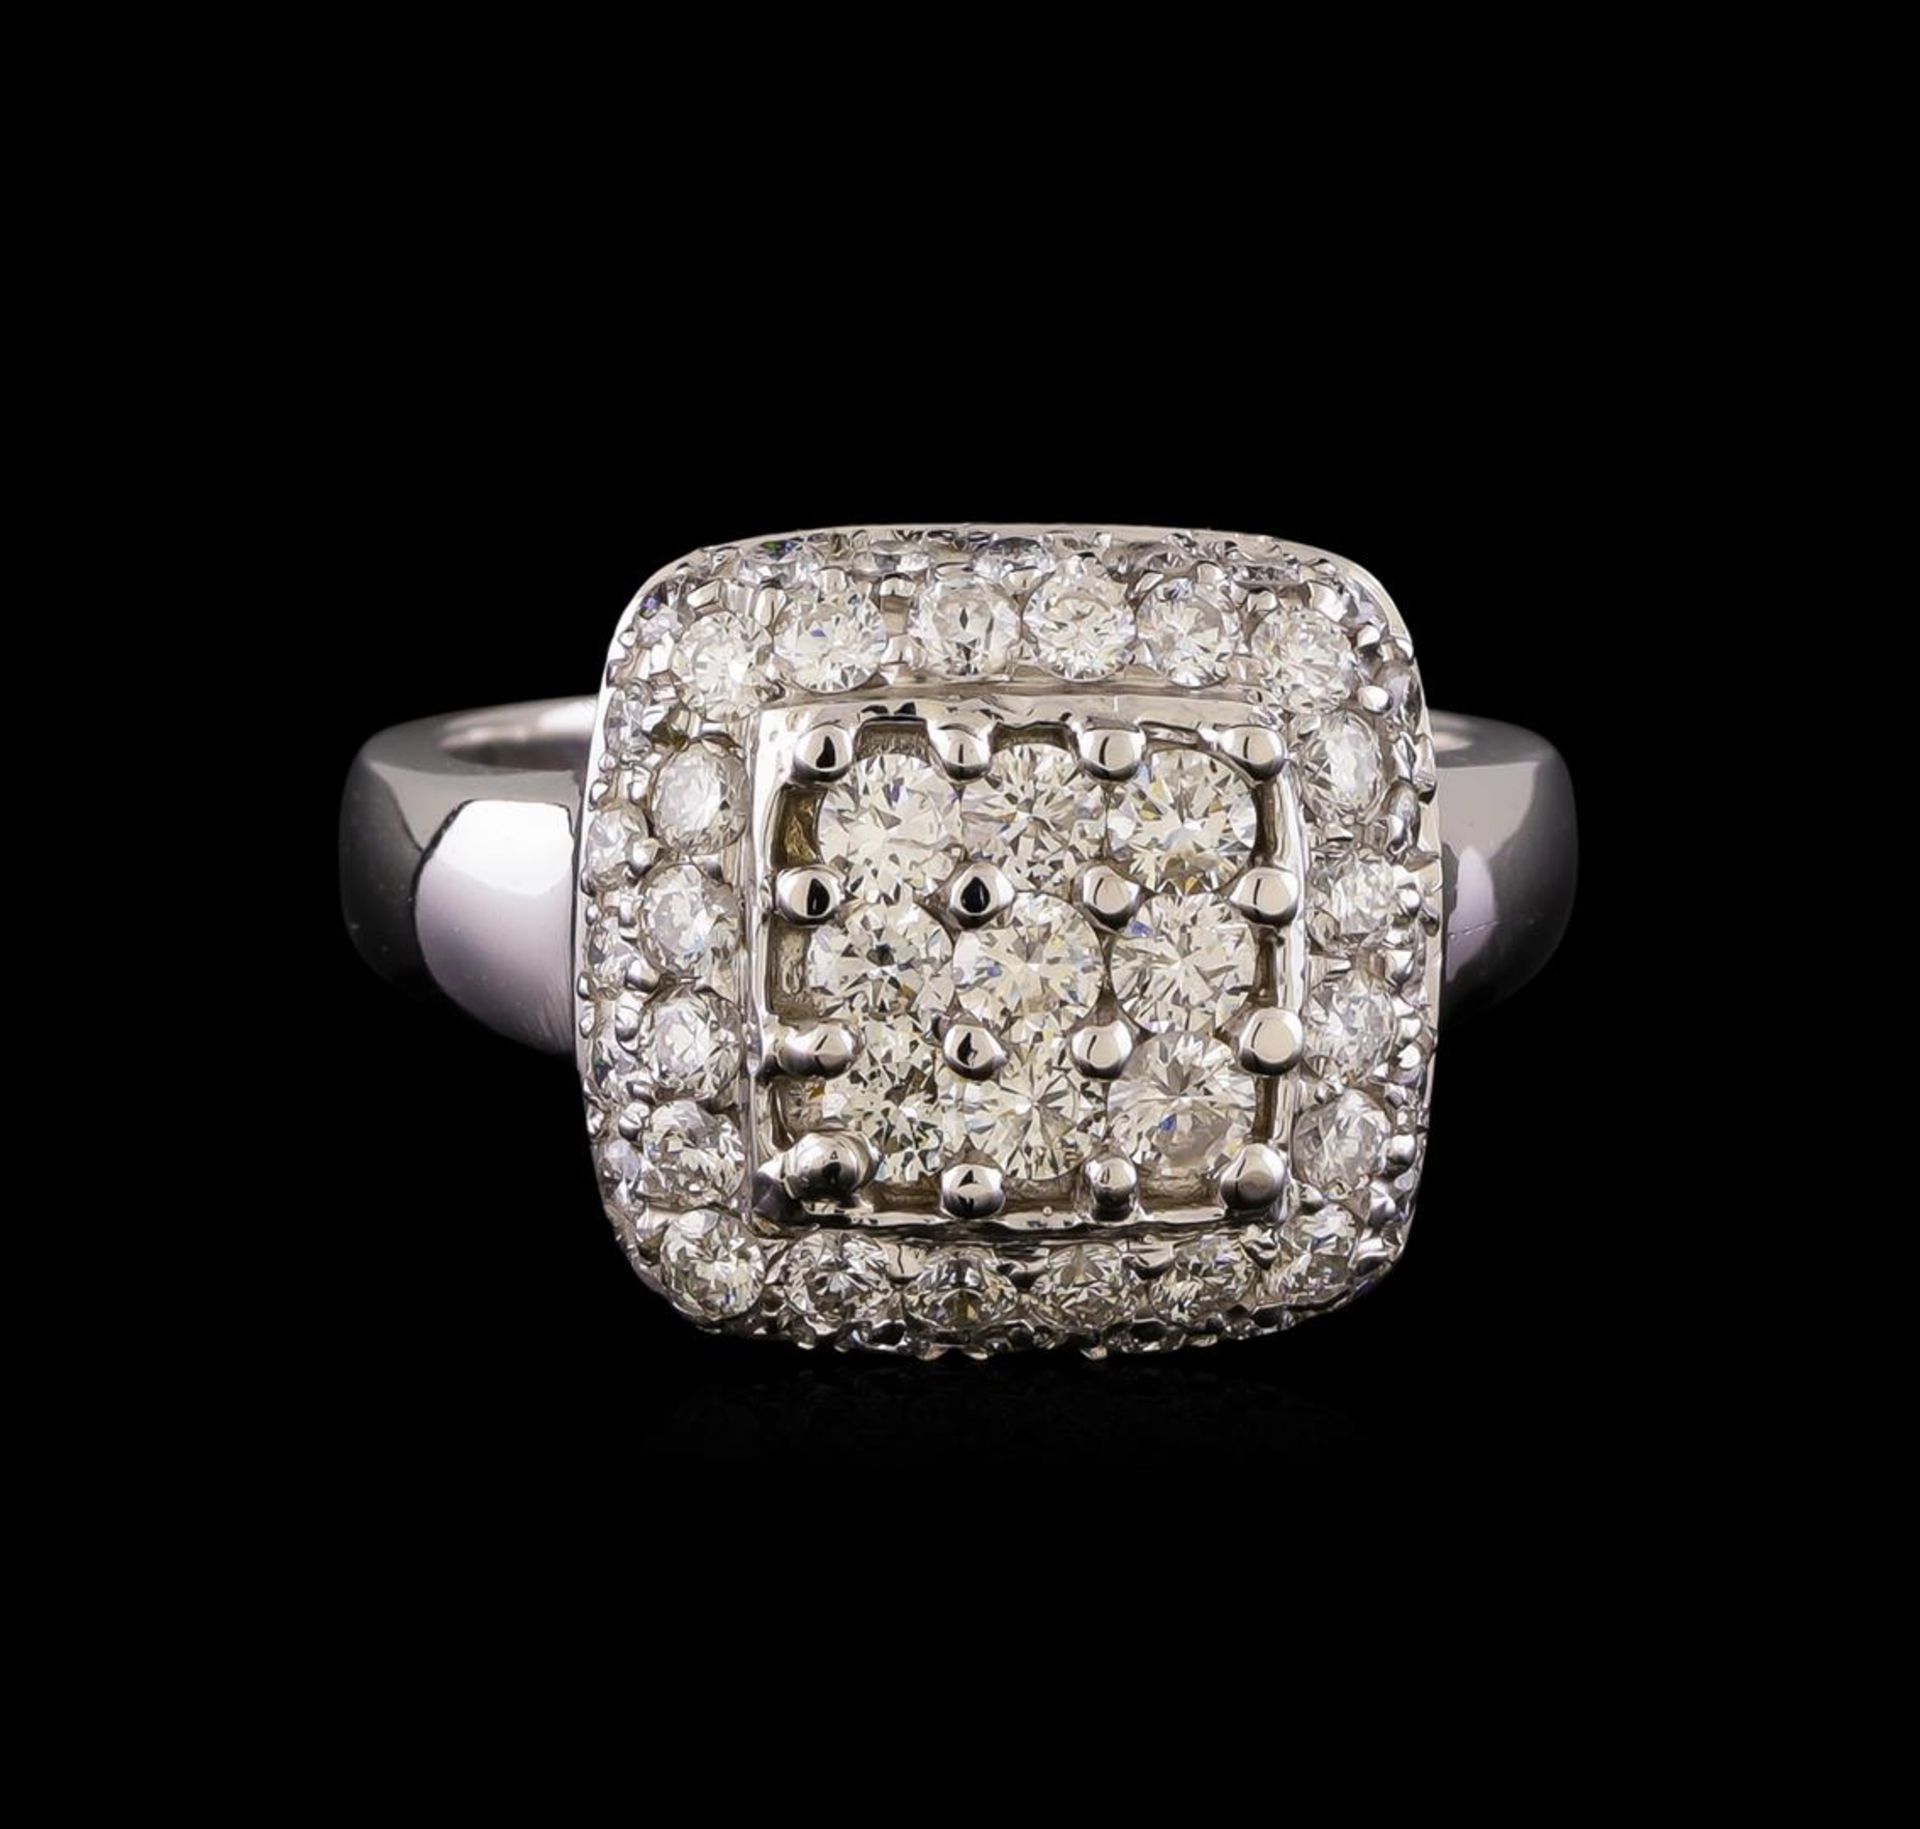 14KT White Gold 1.55 ctw Diamond Ring - Image 2 of 5